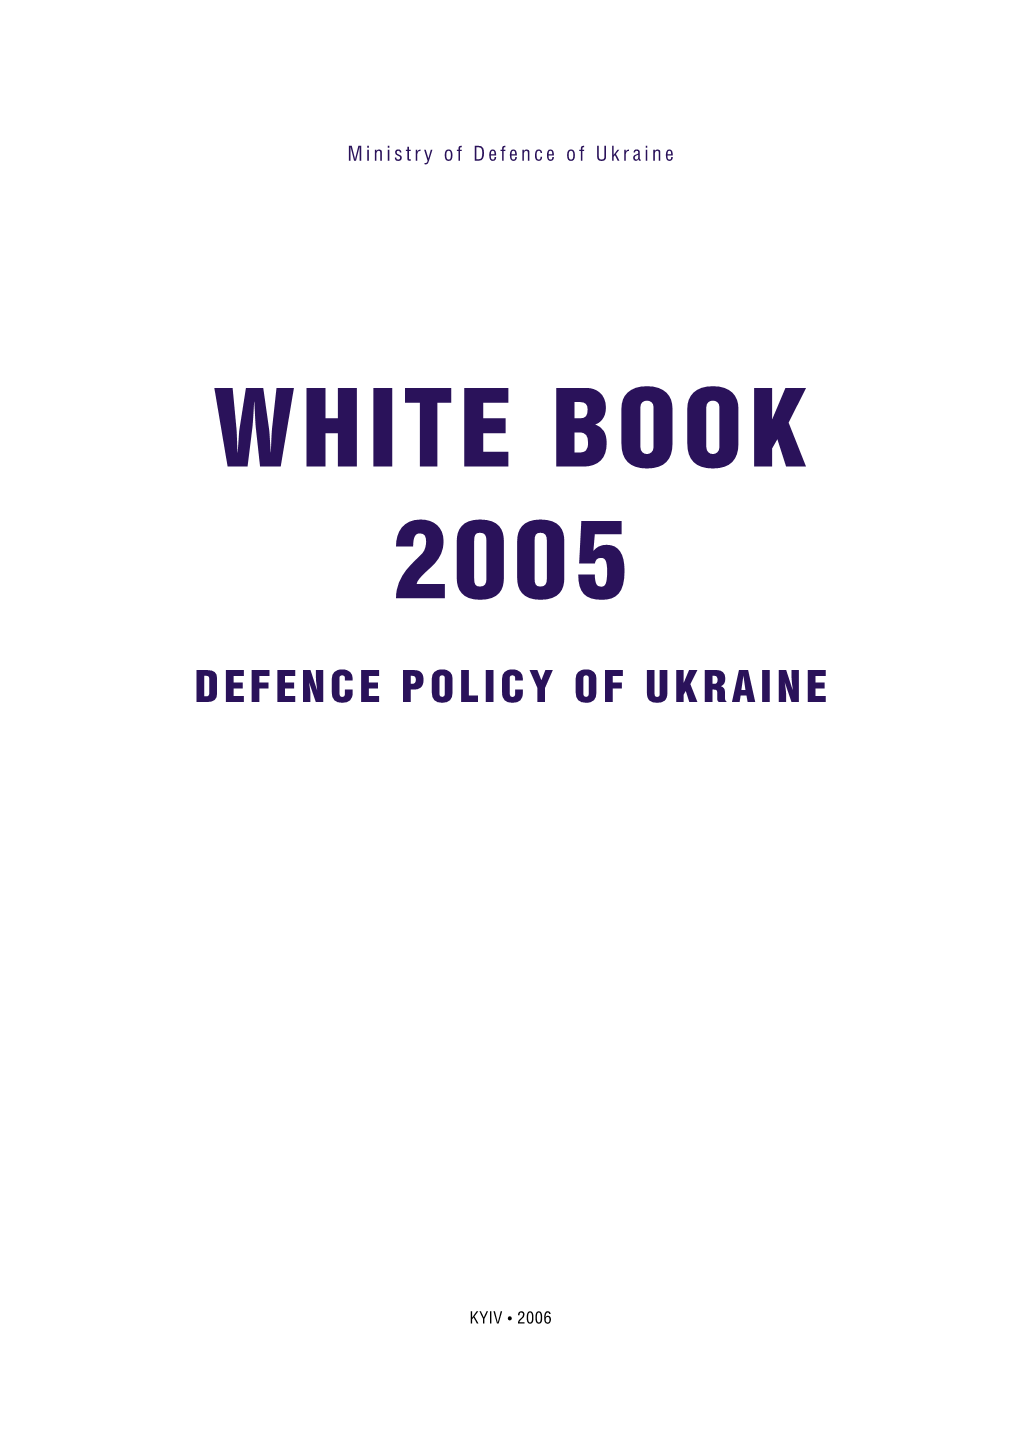 Ukraine: White Book 2005